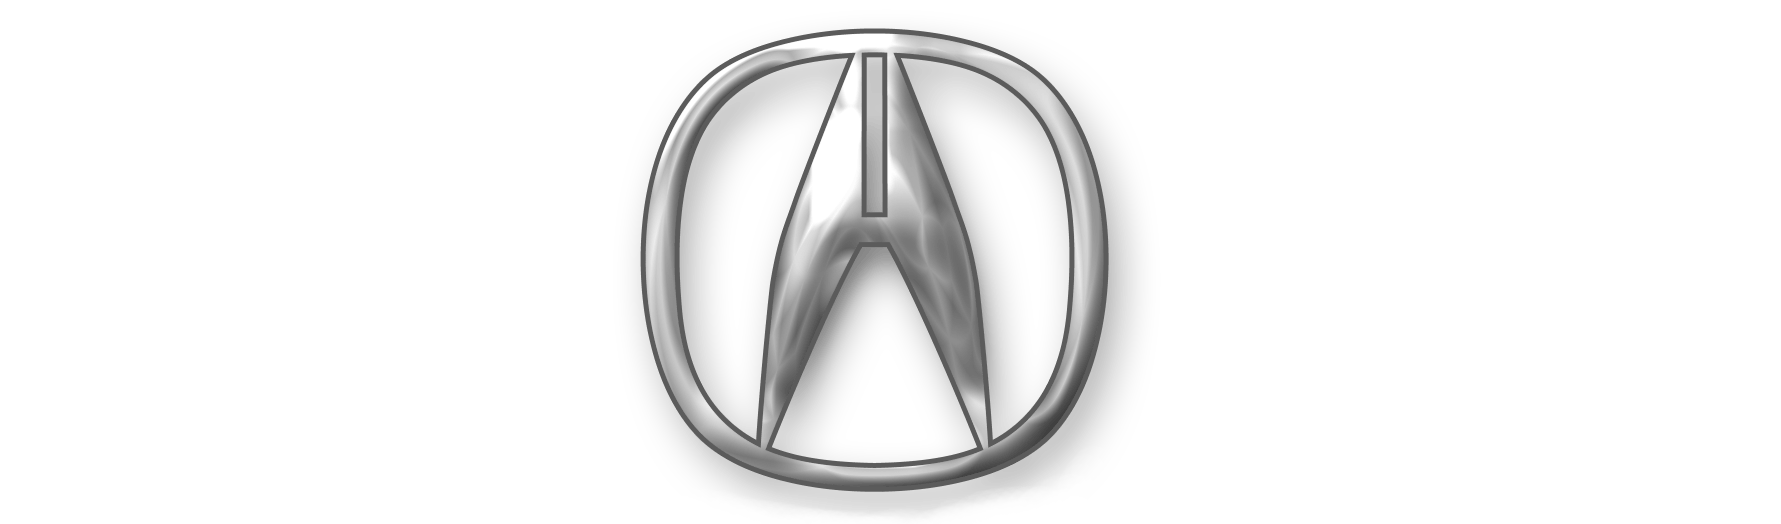 Acura Logo - Acura Logo Meaning and History. Acura symbol | World Cars Brands